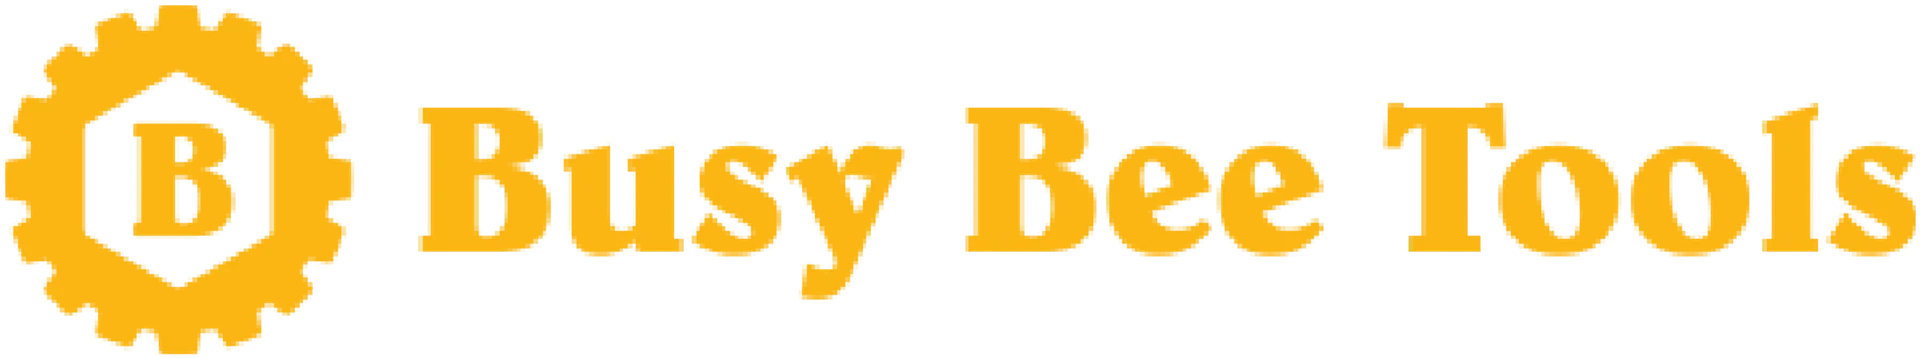 BUSY BEE TOOLS logo